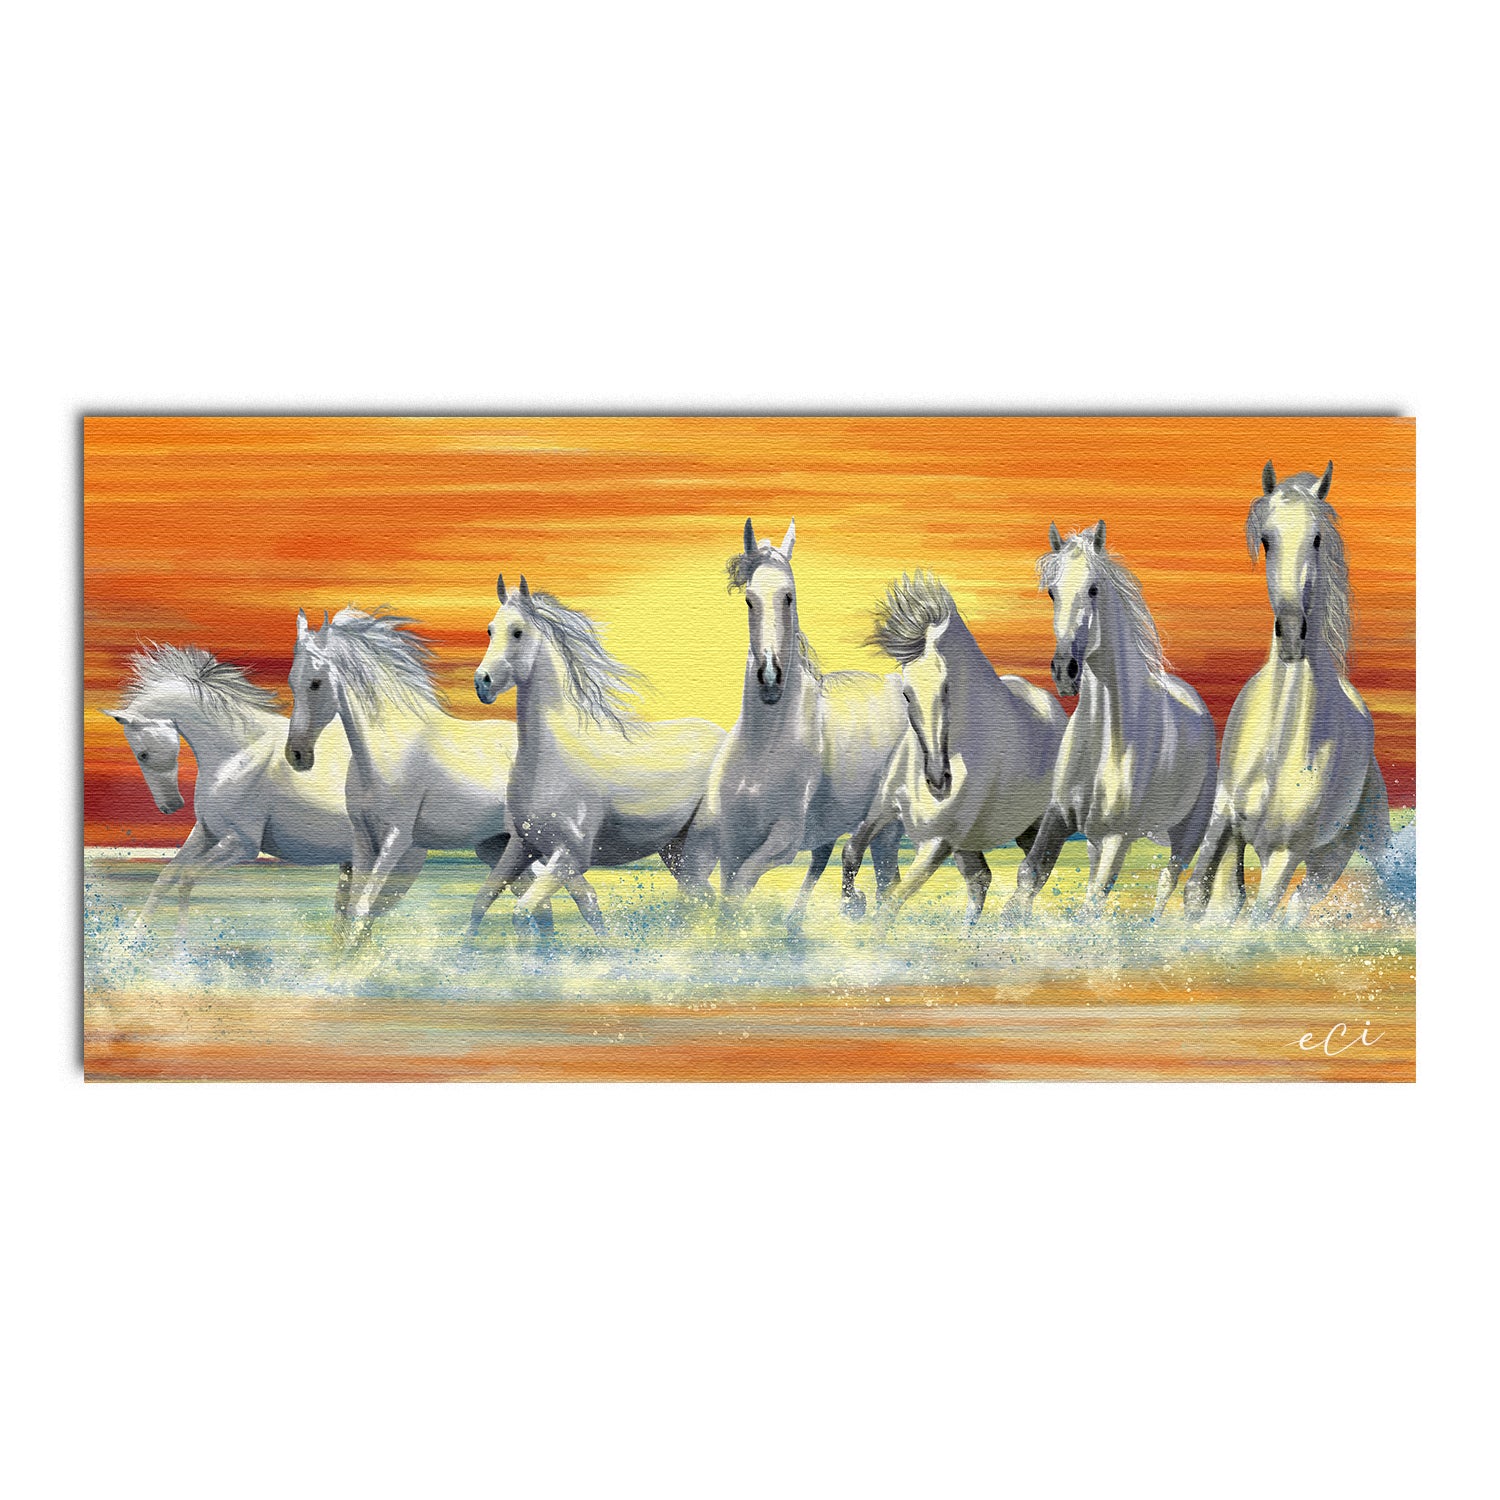 7 White Running Horses Painting Digital Printed Canvas Animal Wall Art 2